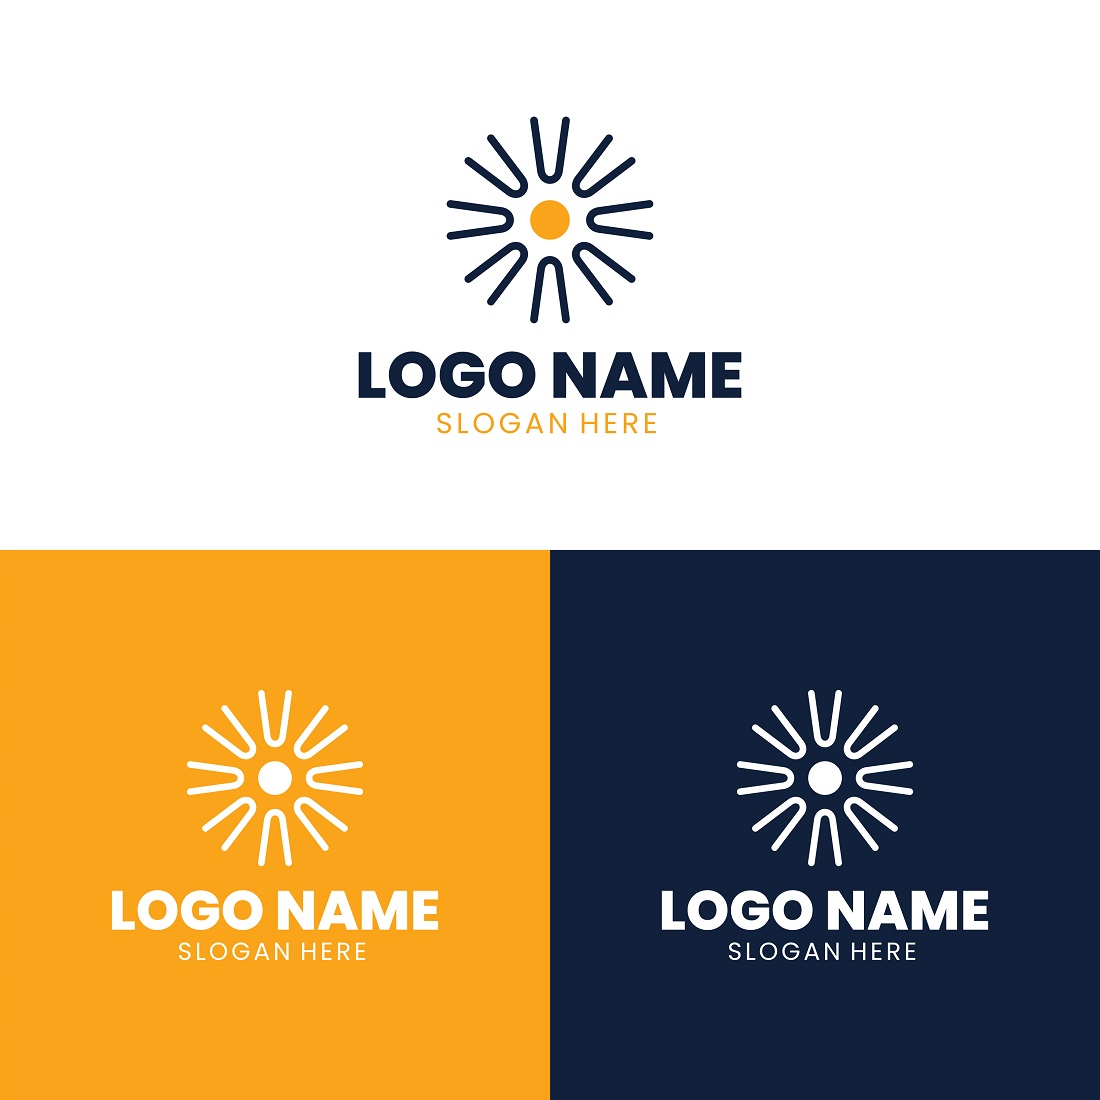 Flat sun logo design preview image.